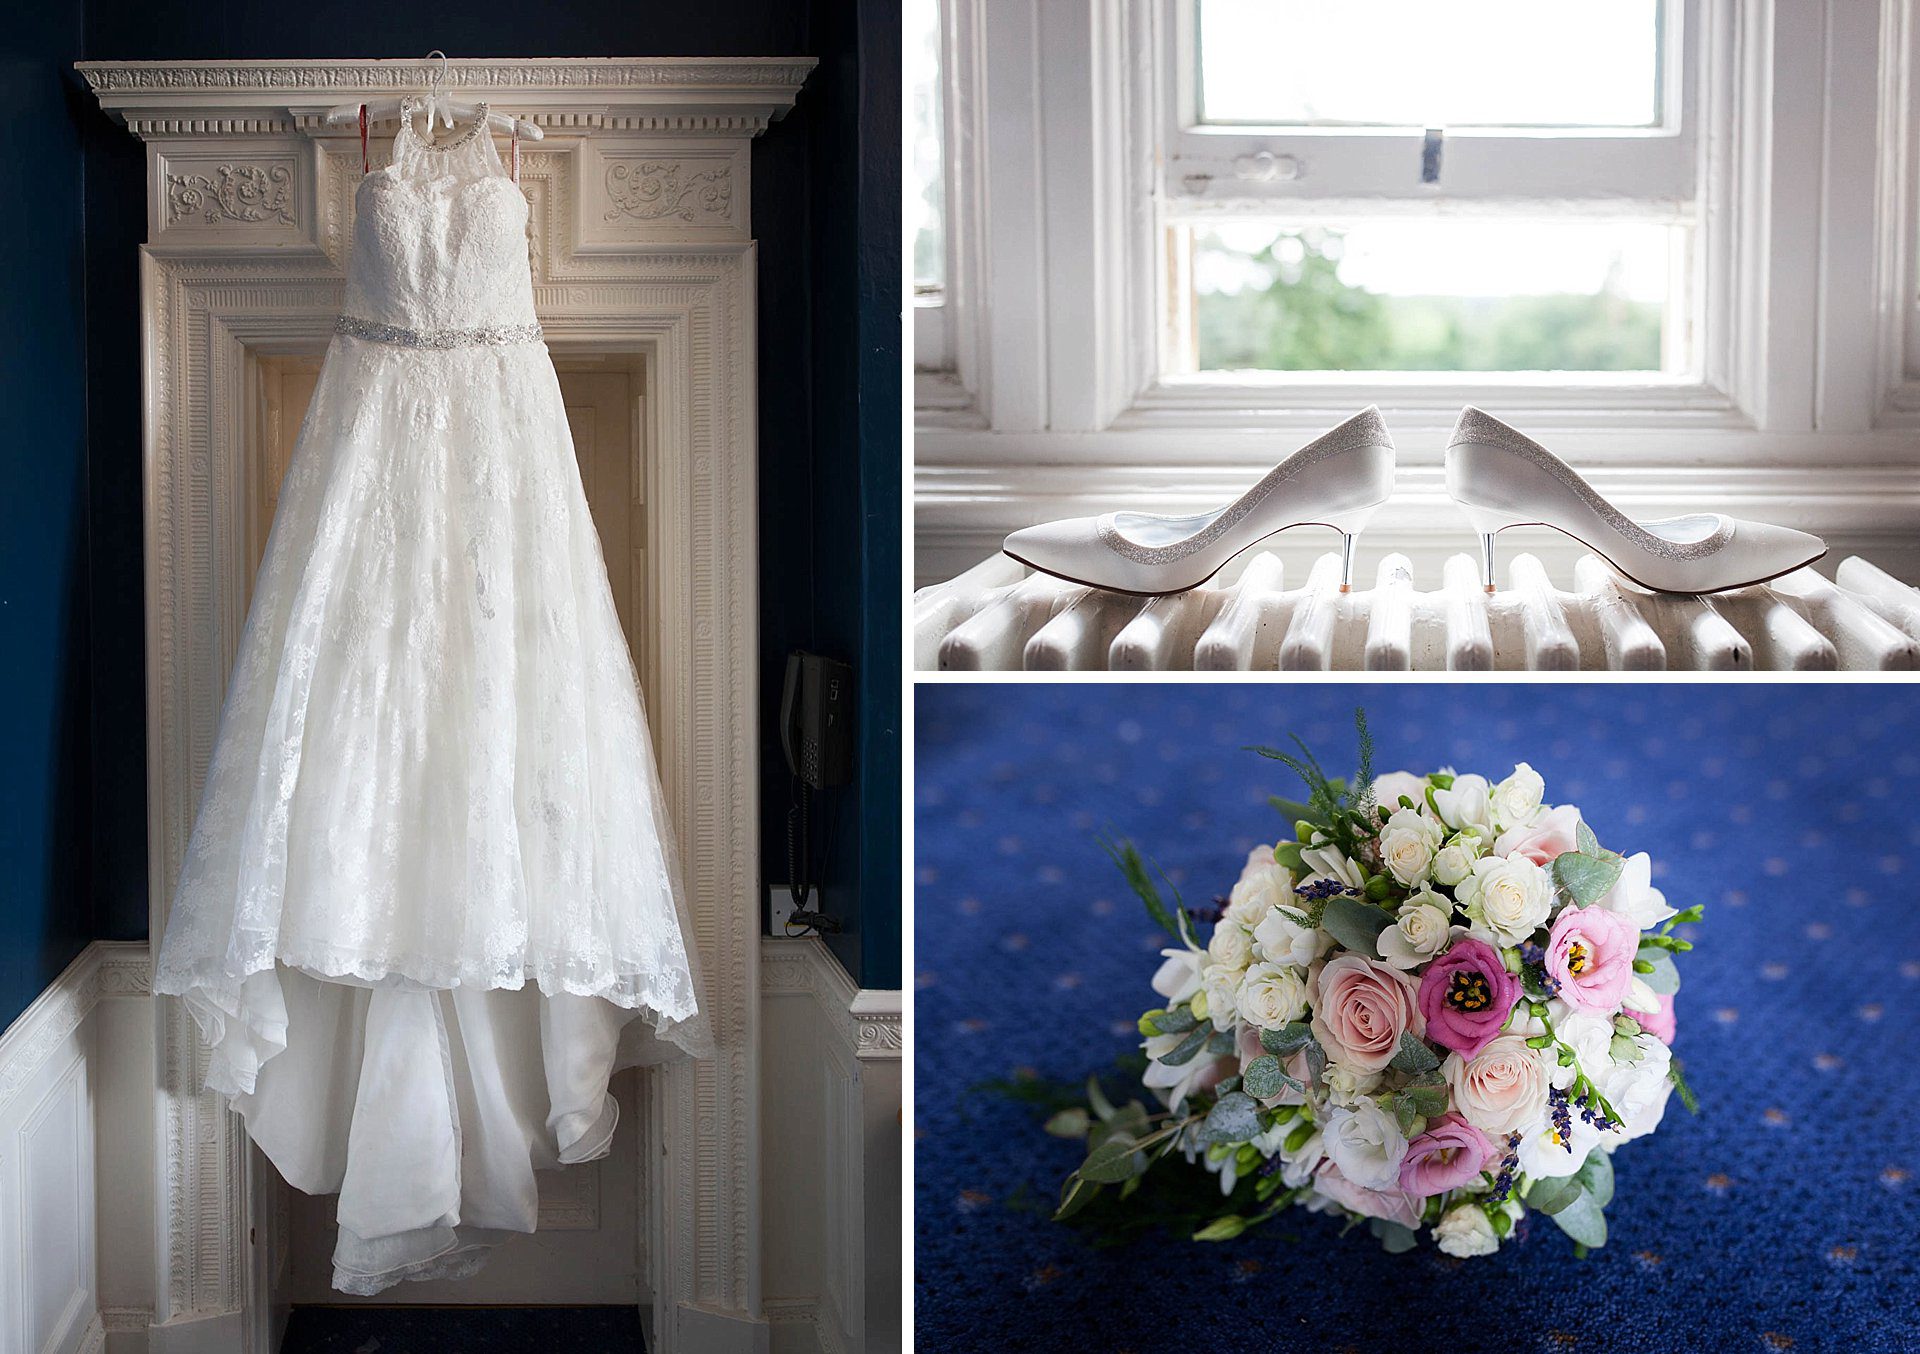 Easthampstead Park bridal details